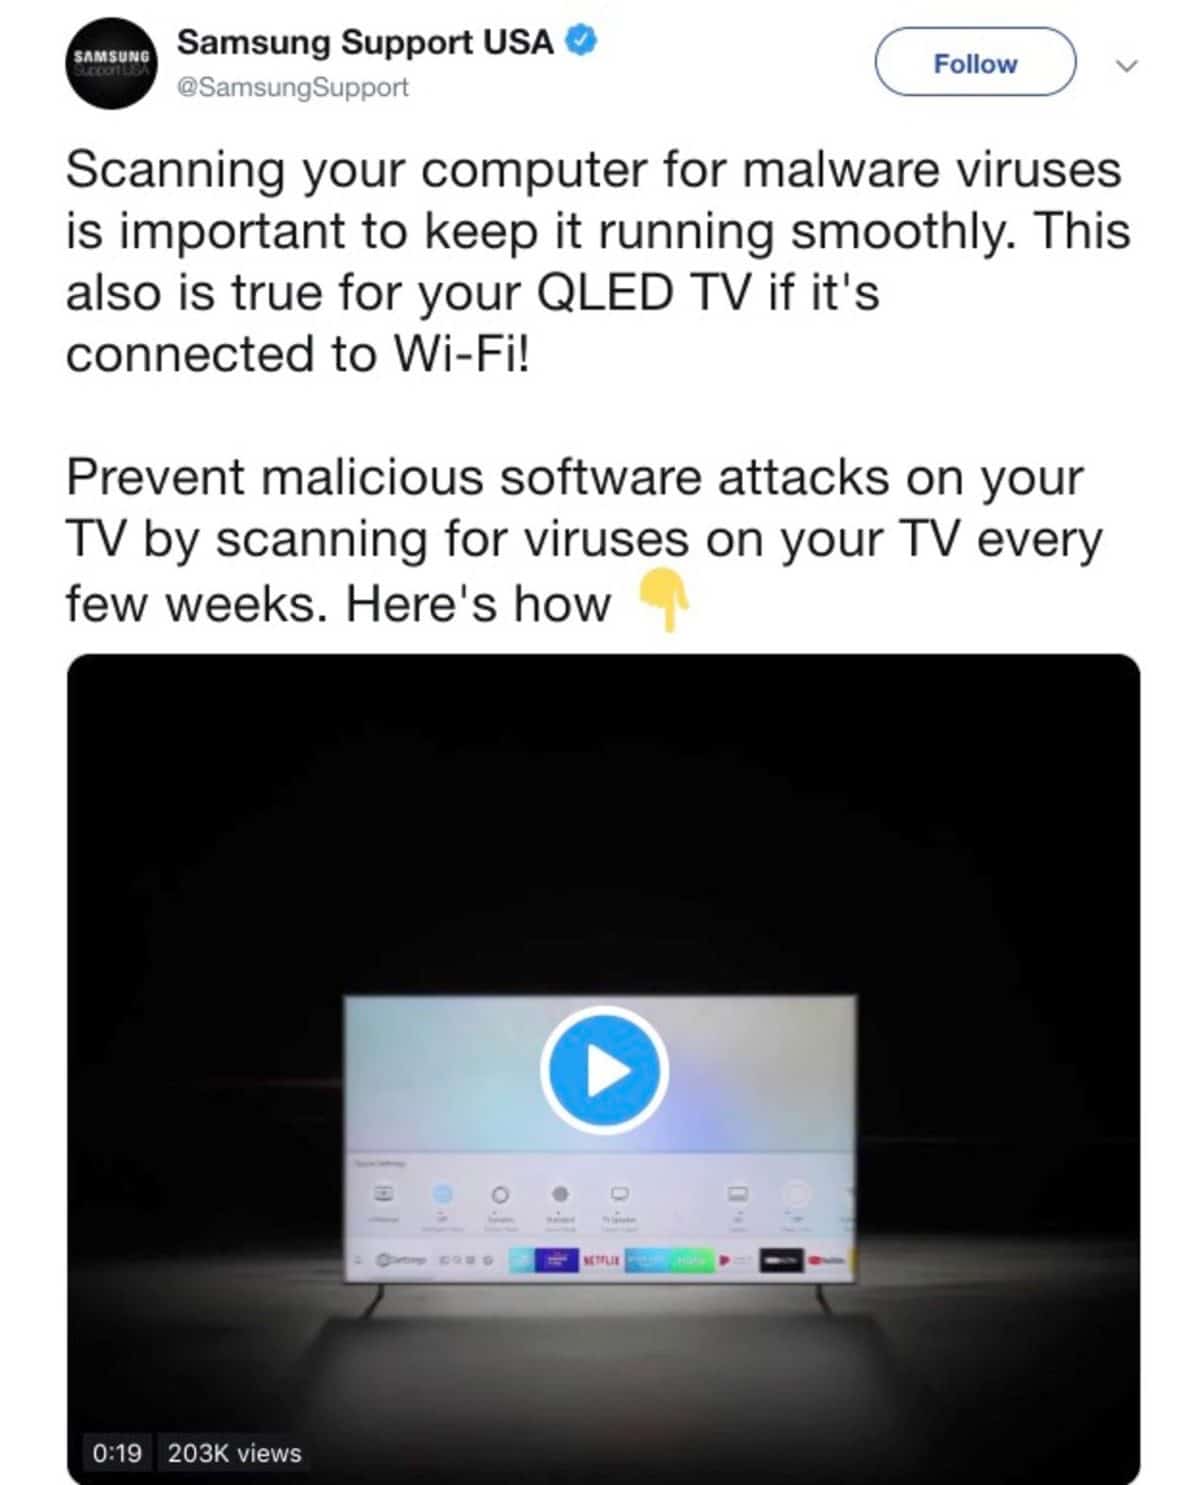 Samsung smart TV malware tweet